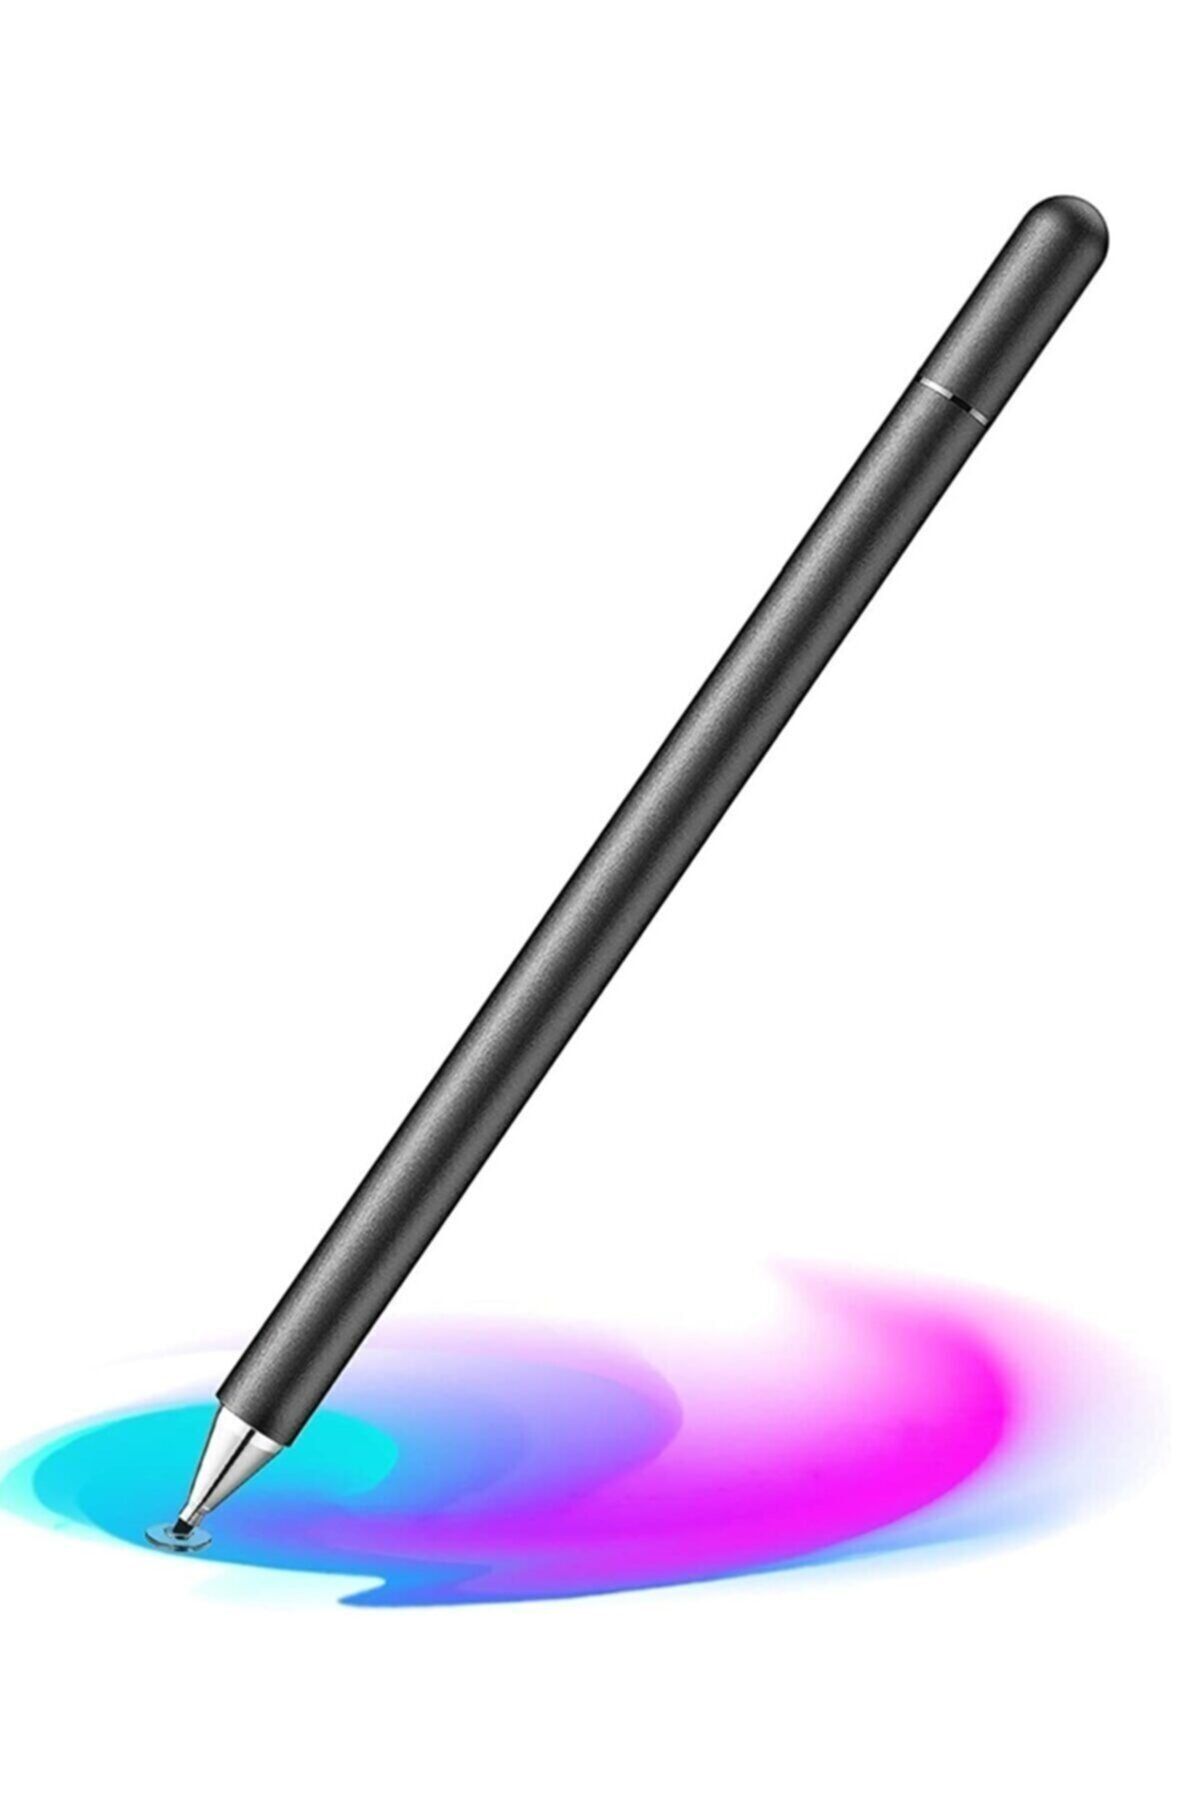 Samsung Dokunmatik Passive Stylus Kalem Tablet Telefon Bilgisayar Dokunmatik Kalemi